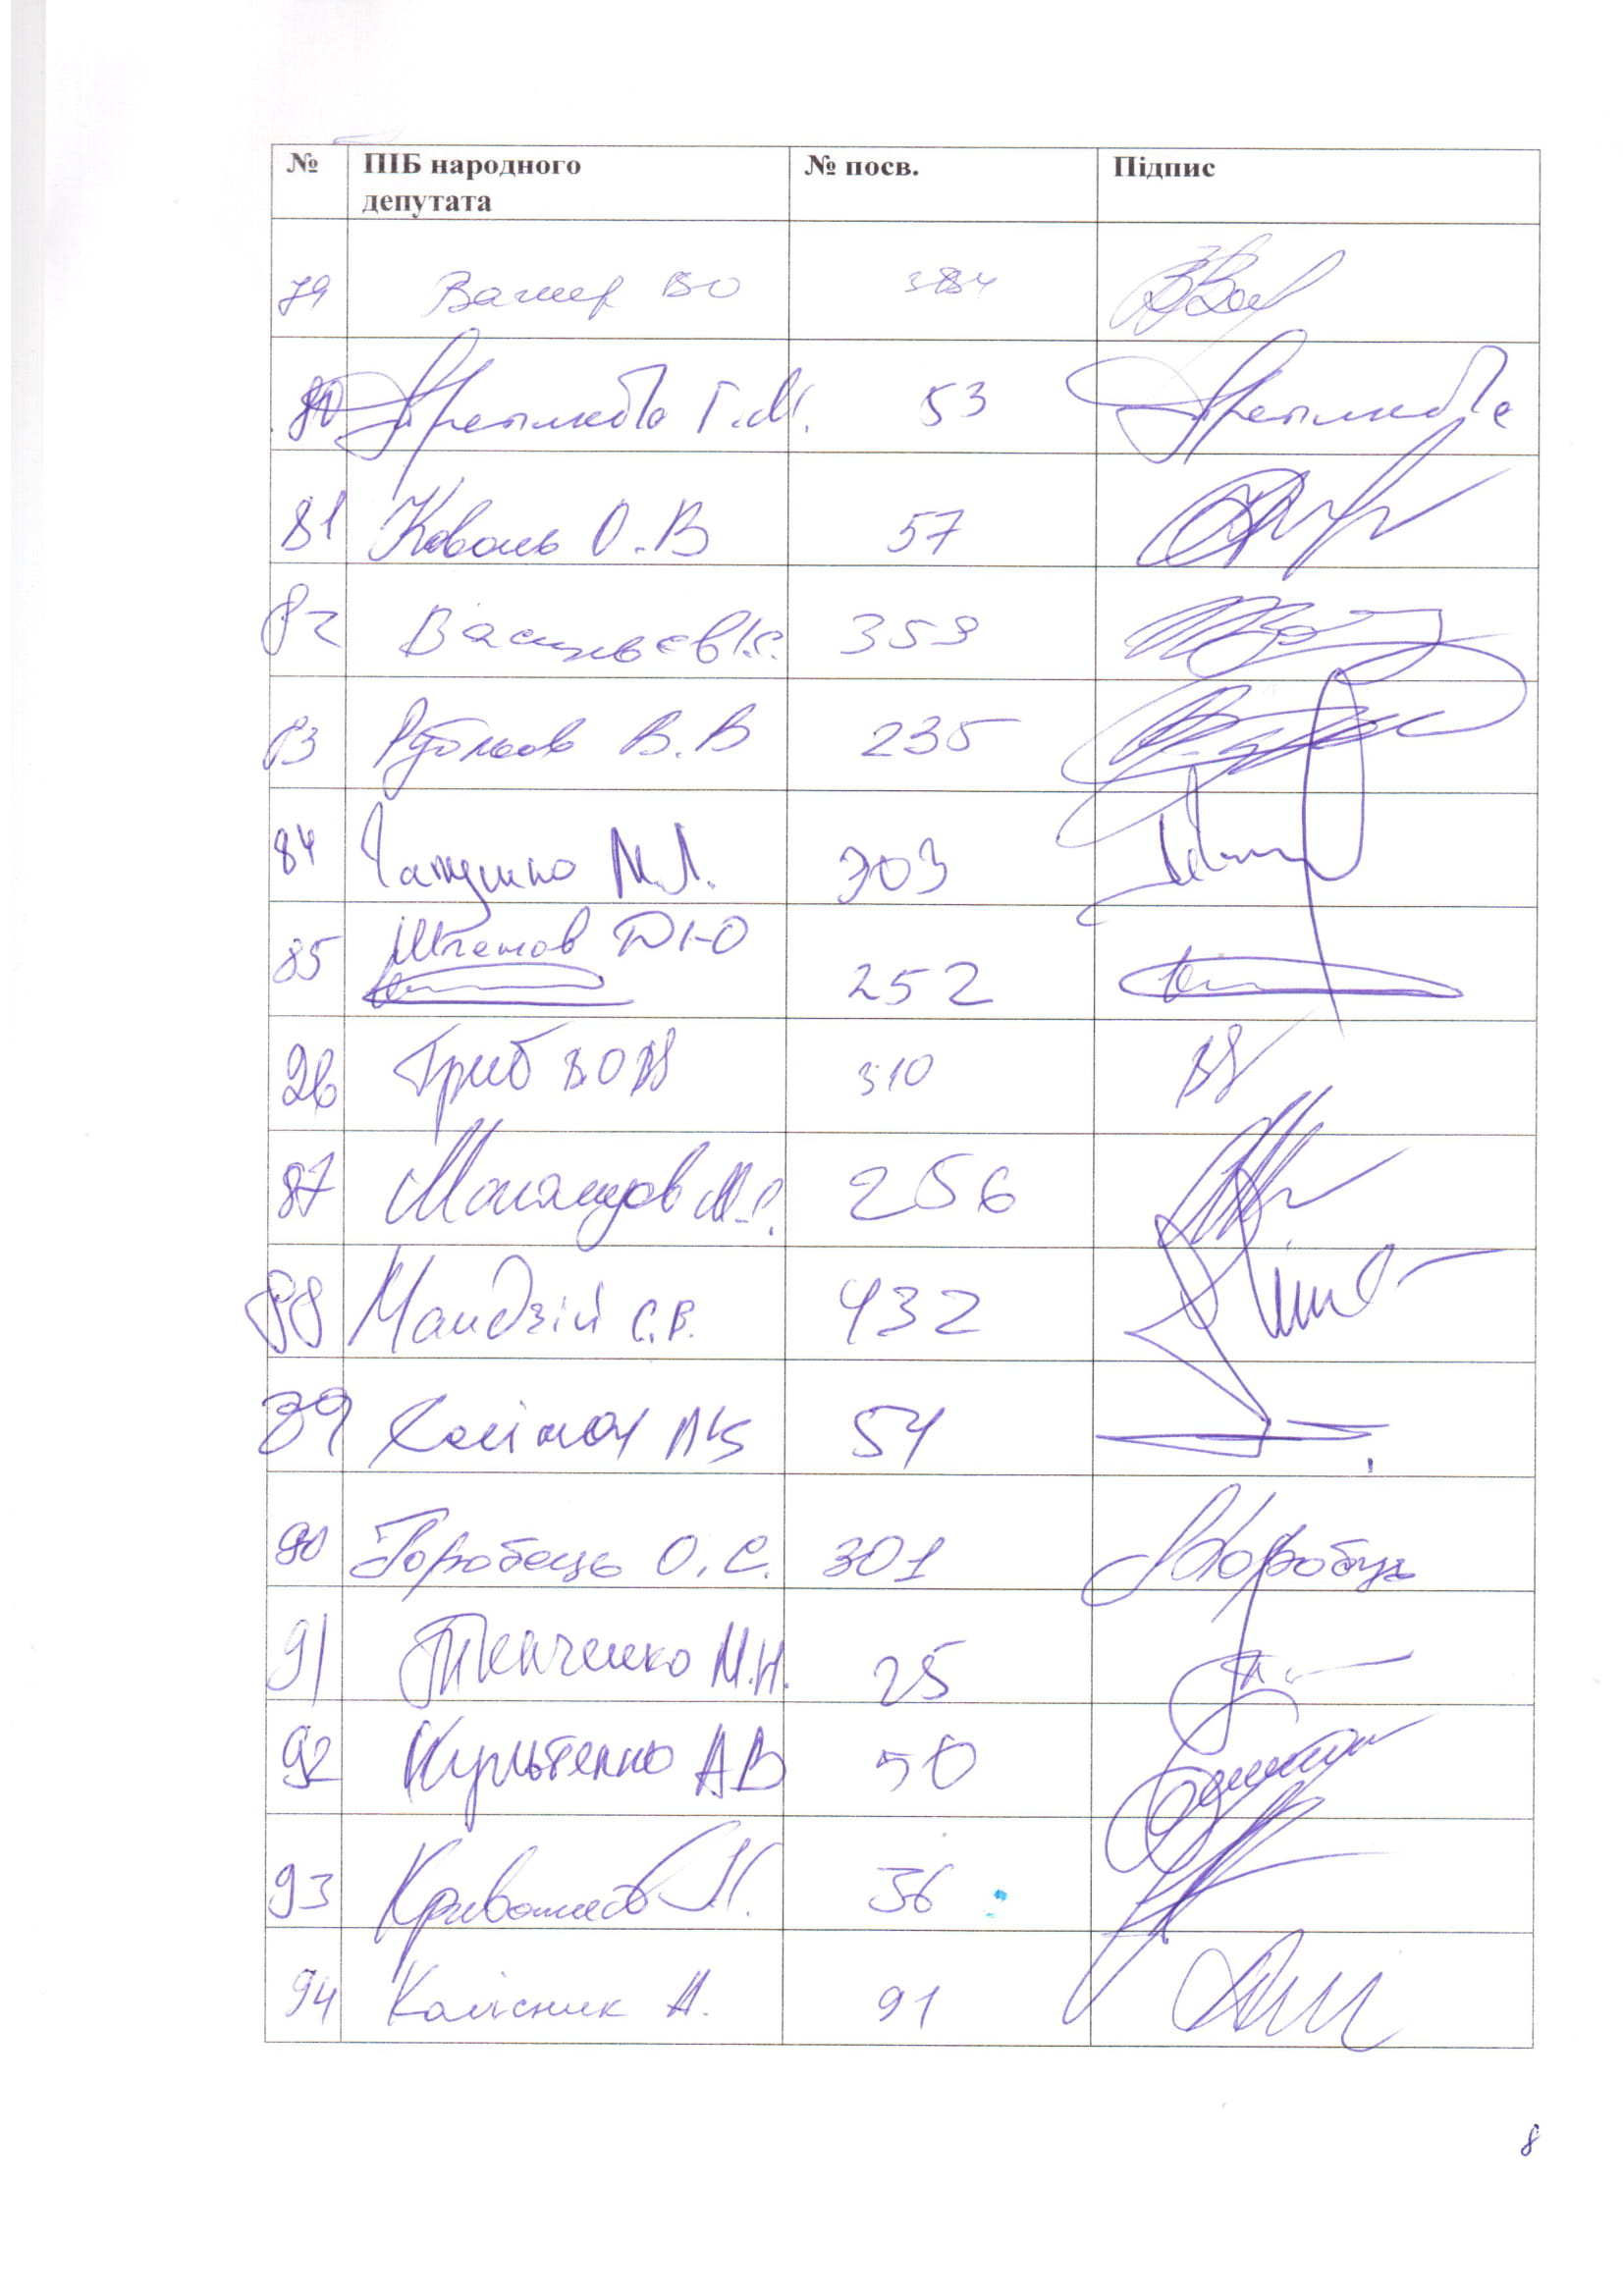 151 нардеп подписал обращение к Венедиктовой на фоне давления НАБУ на холдинг Бахматюка. Фото